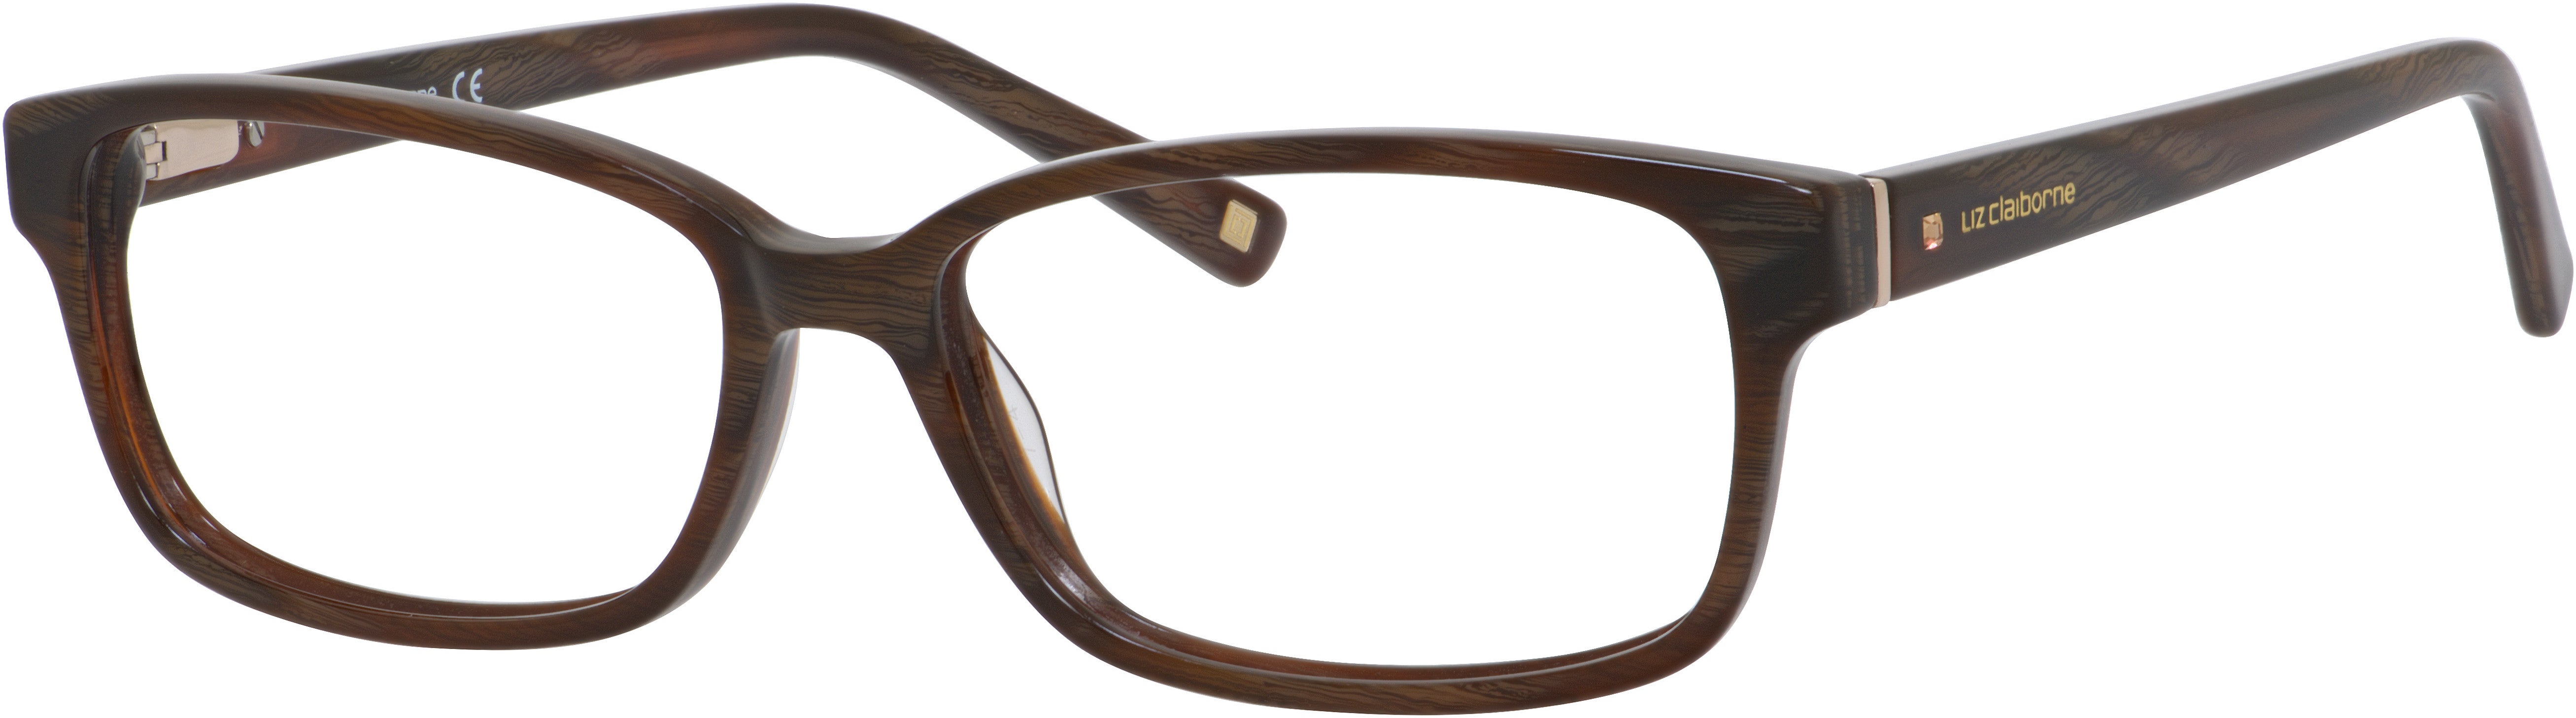  Liz Claiborne 633 Rectangular Eyeglasses 0WR9-0WR9  Brown Havana (00 Demo Lens)